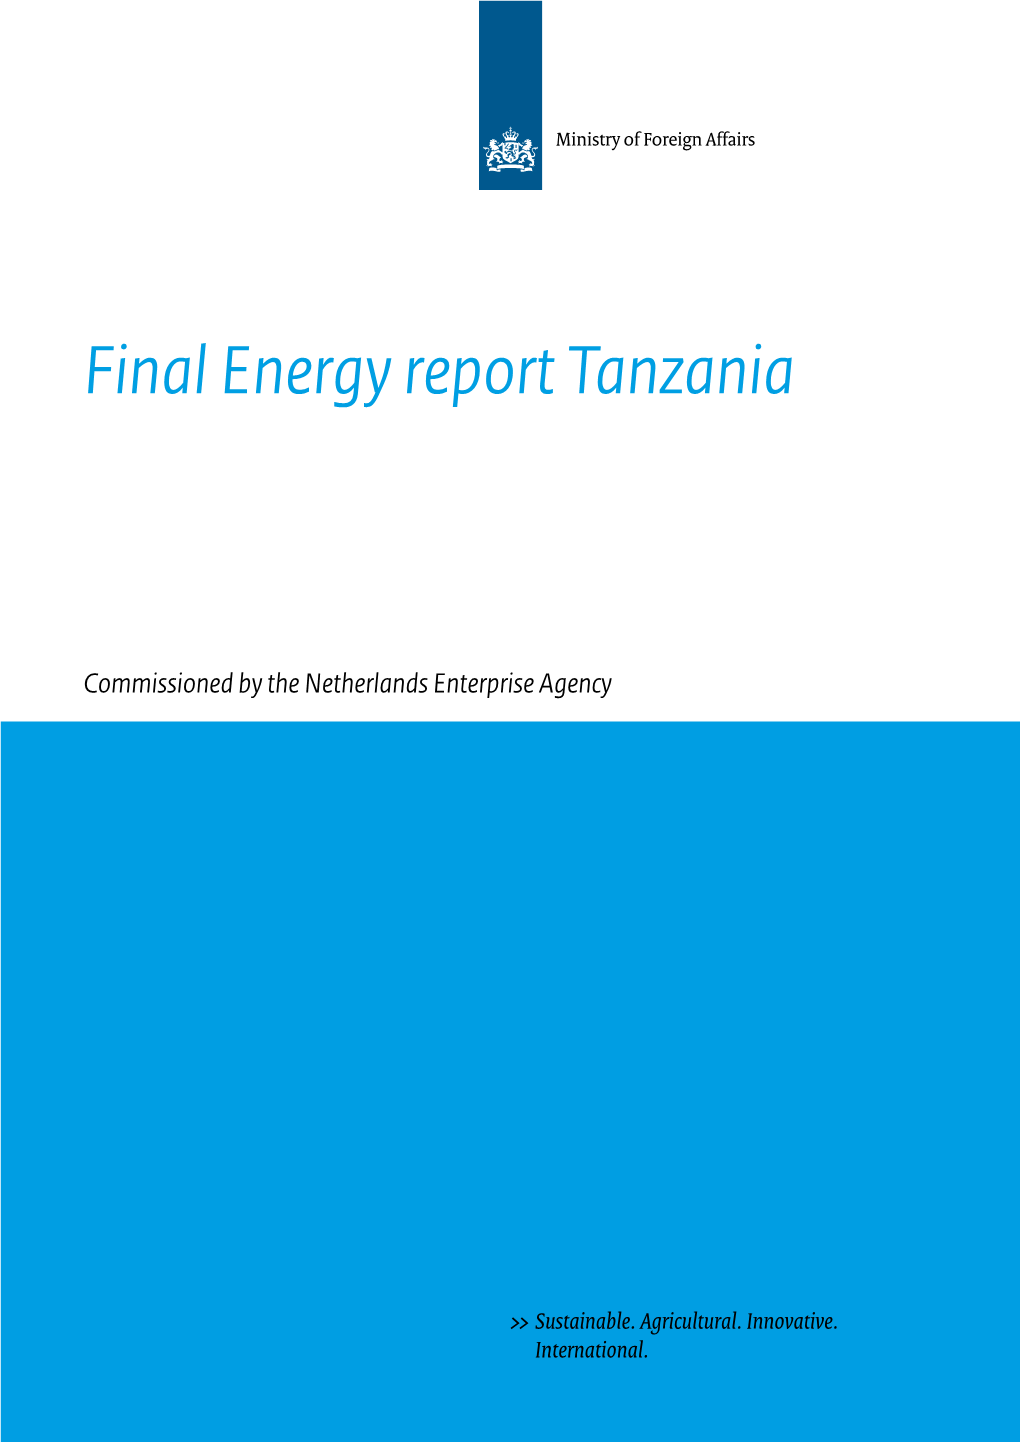 Final Energy Report Tanzania